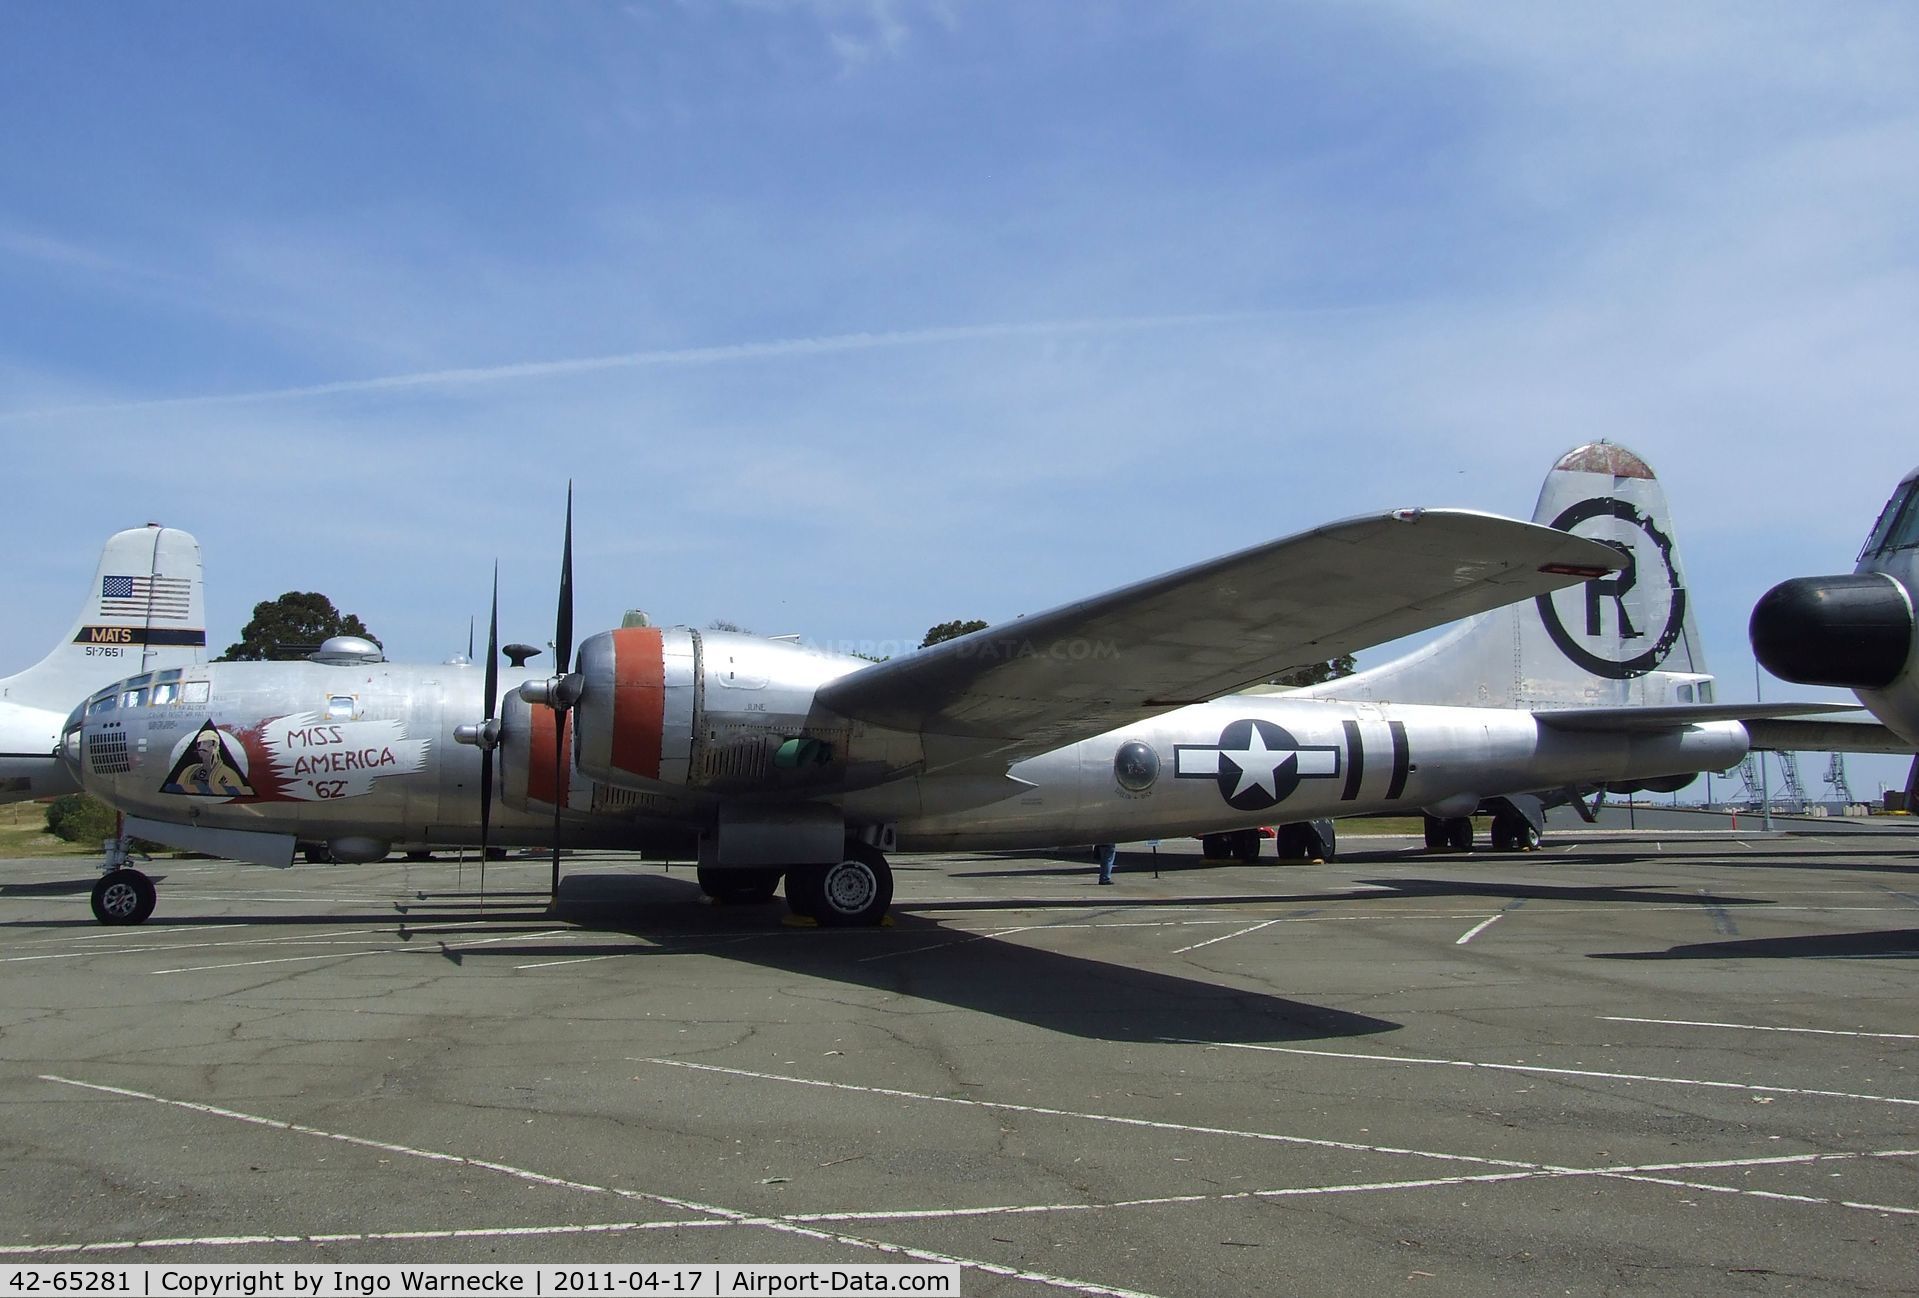 42-65281, 1942 Boeing B-29-25-MO C/N 3456, Boeing B-29 Superfortress at the Travis Air Museum, Travis AFB Fairfield CA